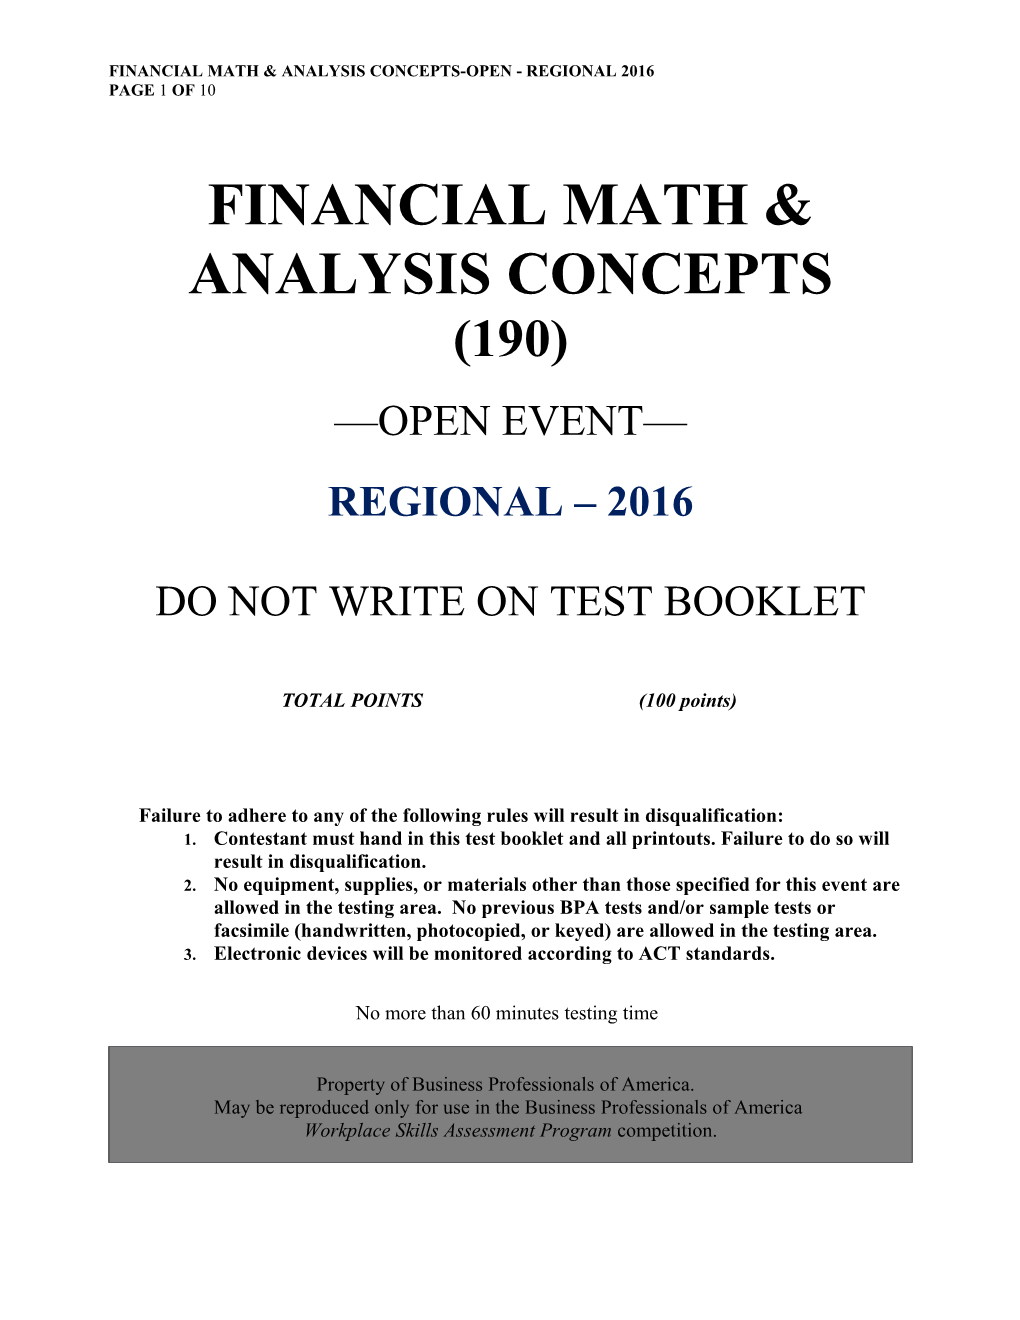 Financial Math and Analysis